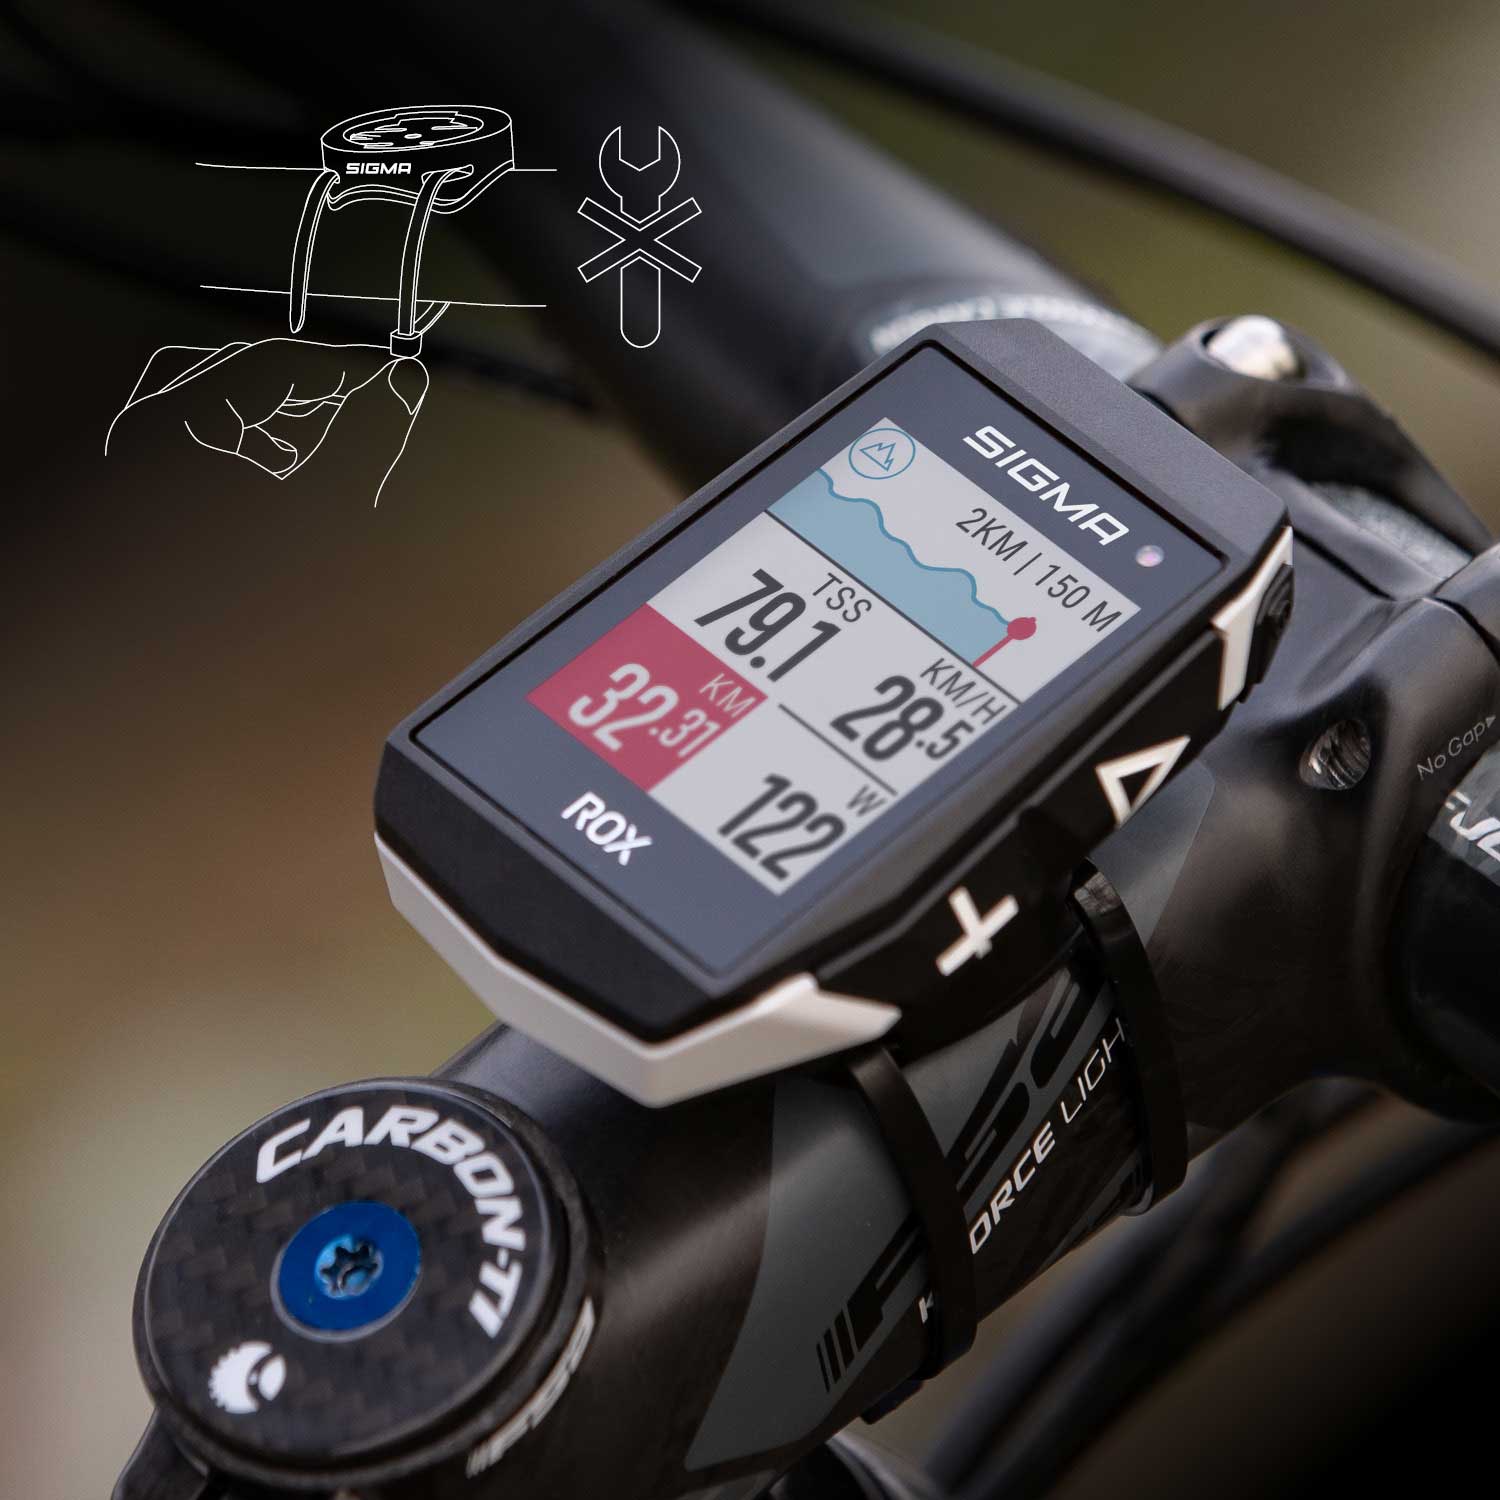 Compteur vélo GPS Sigma ROX 10.0 GPS